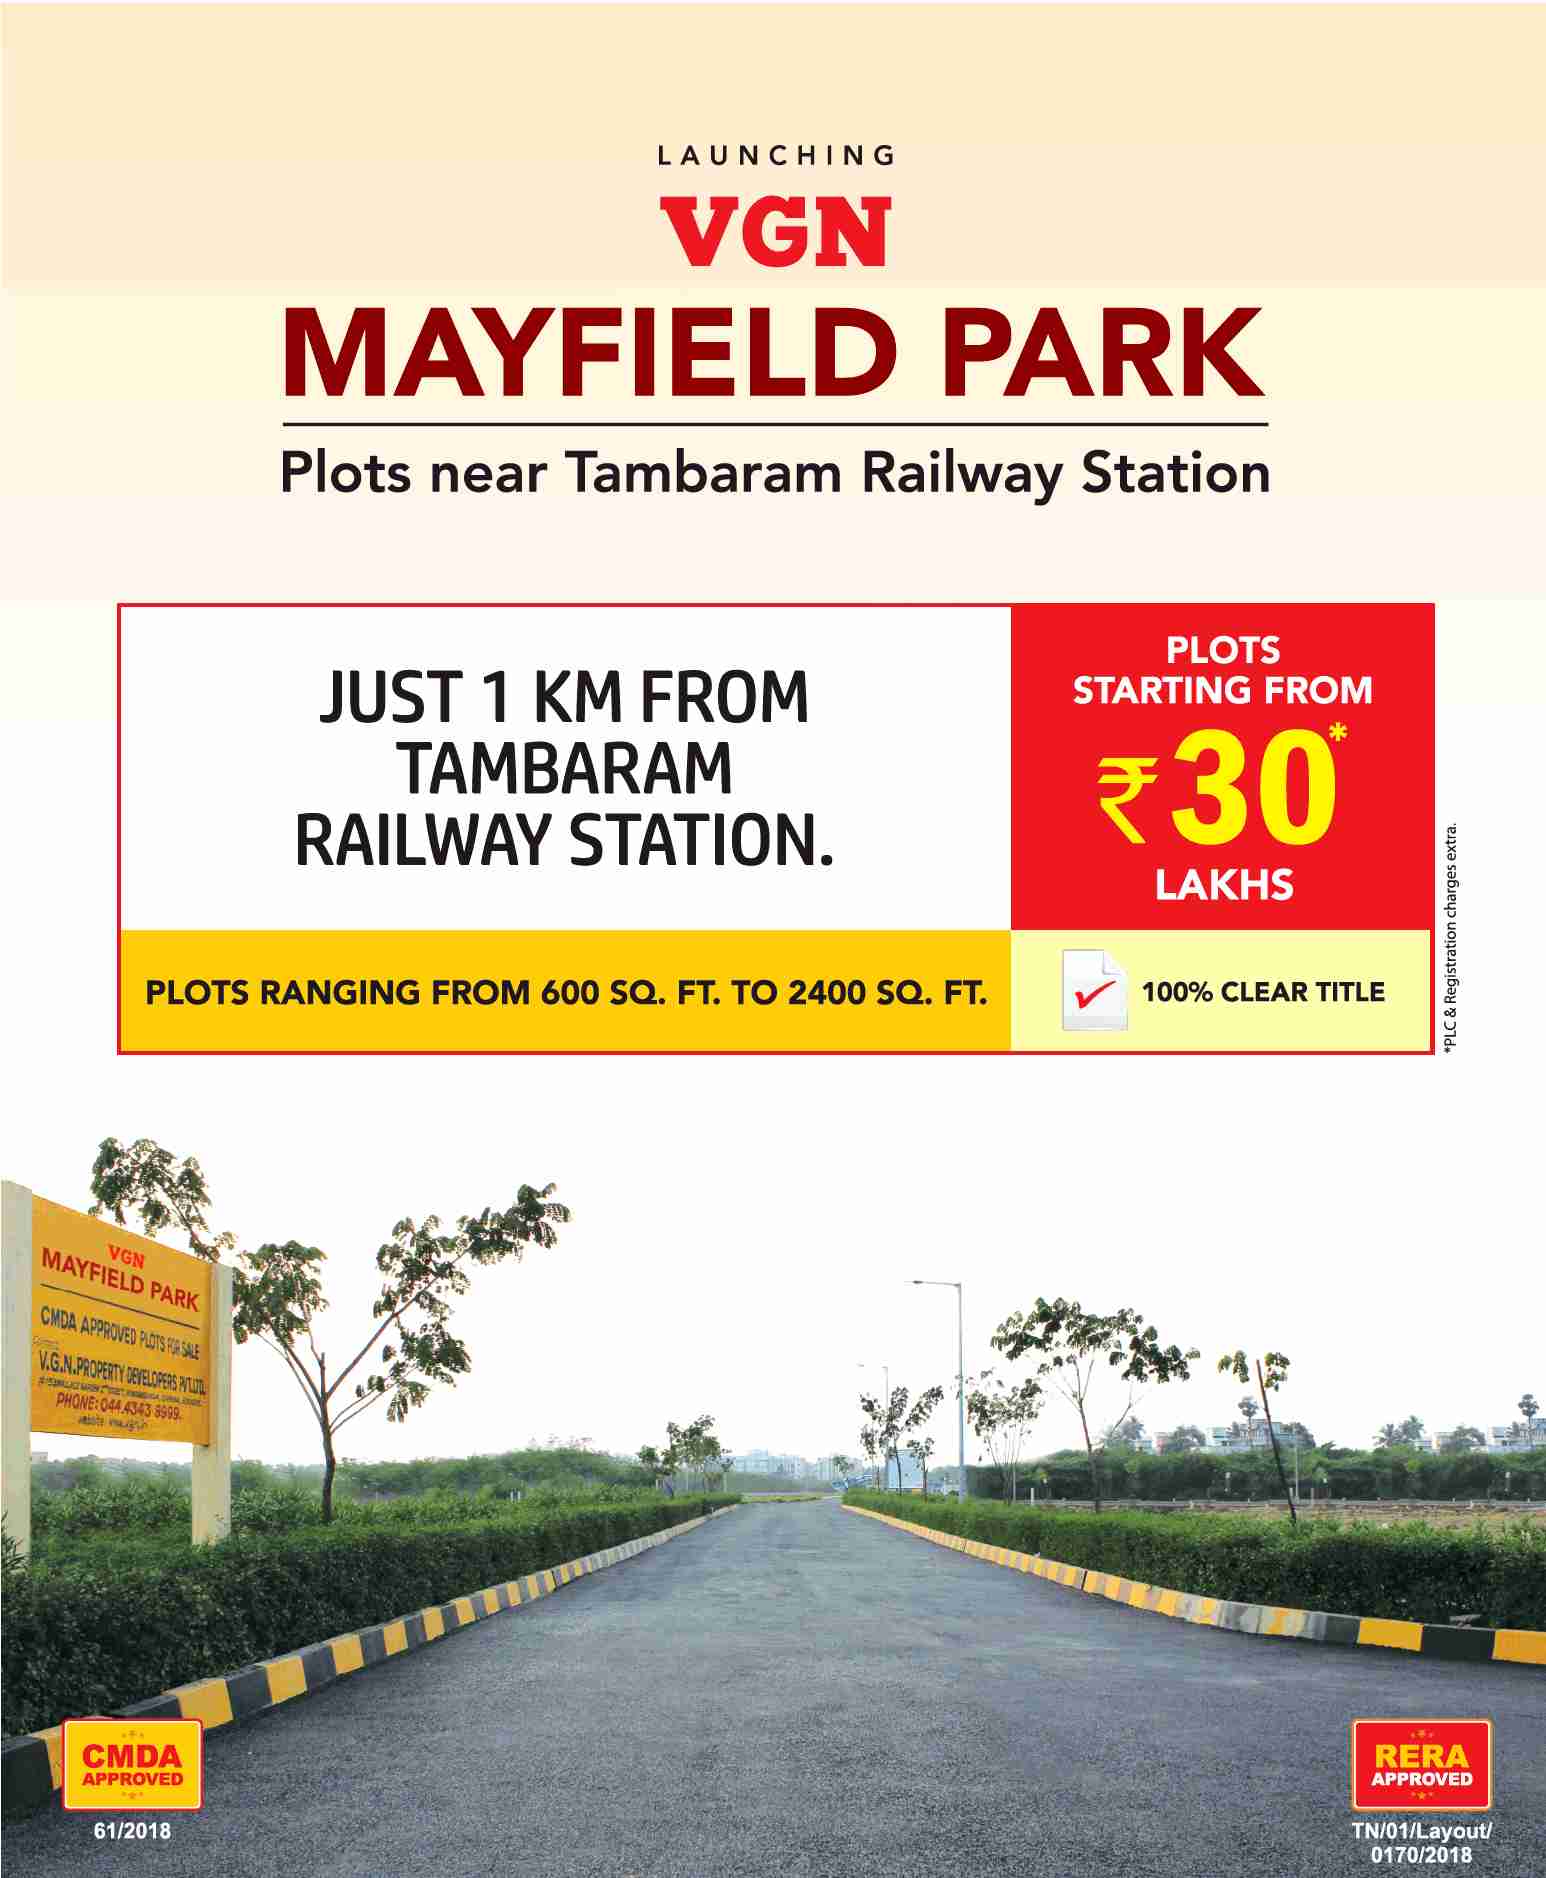 Launching VGN Mayfield Park at Tambaram, Chennai Update